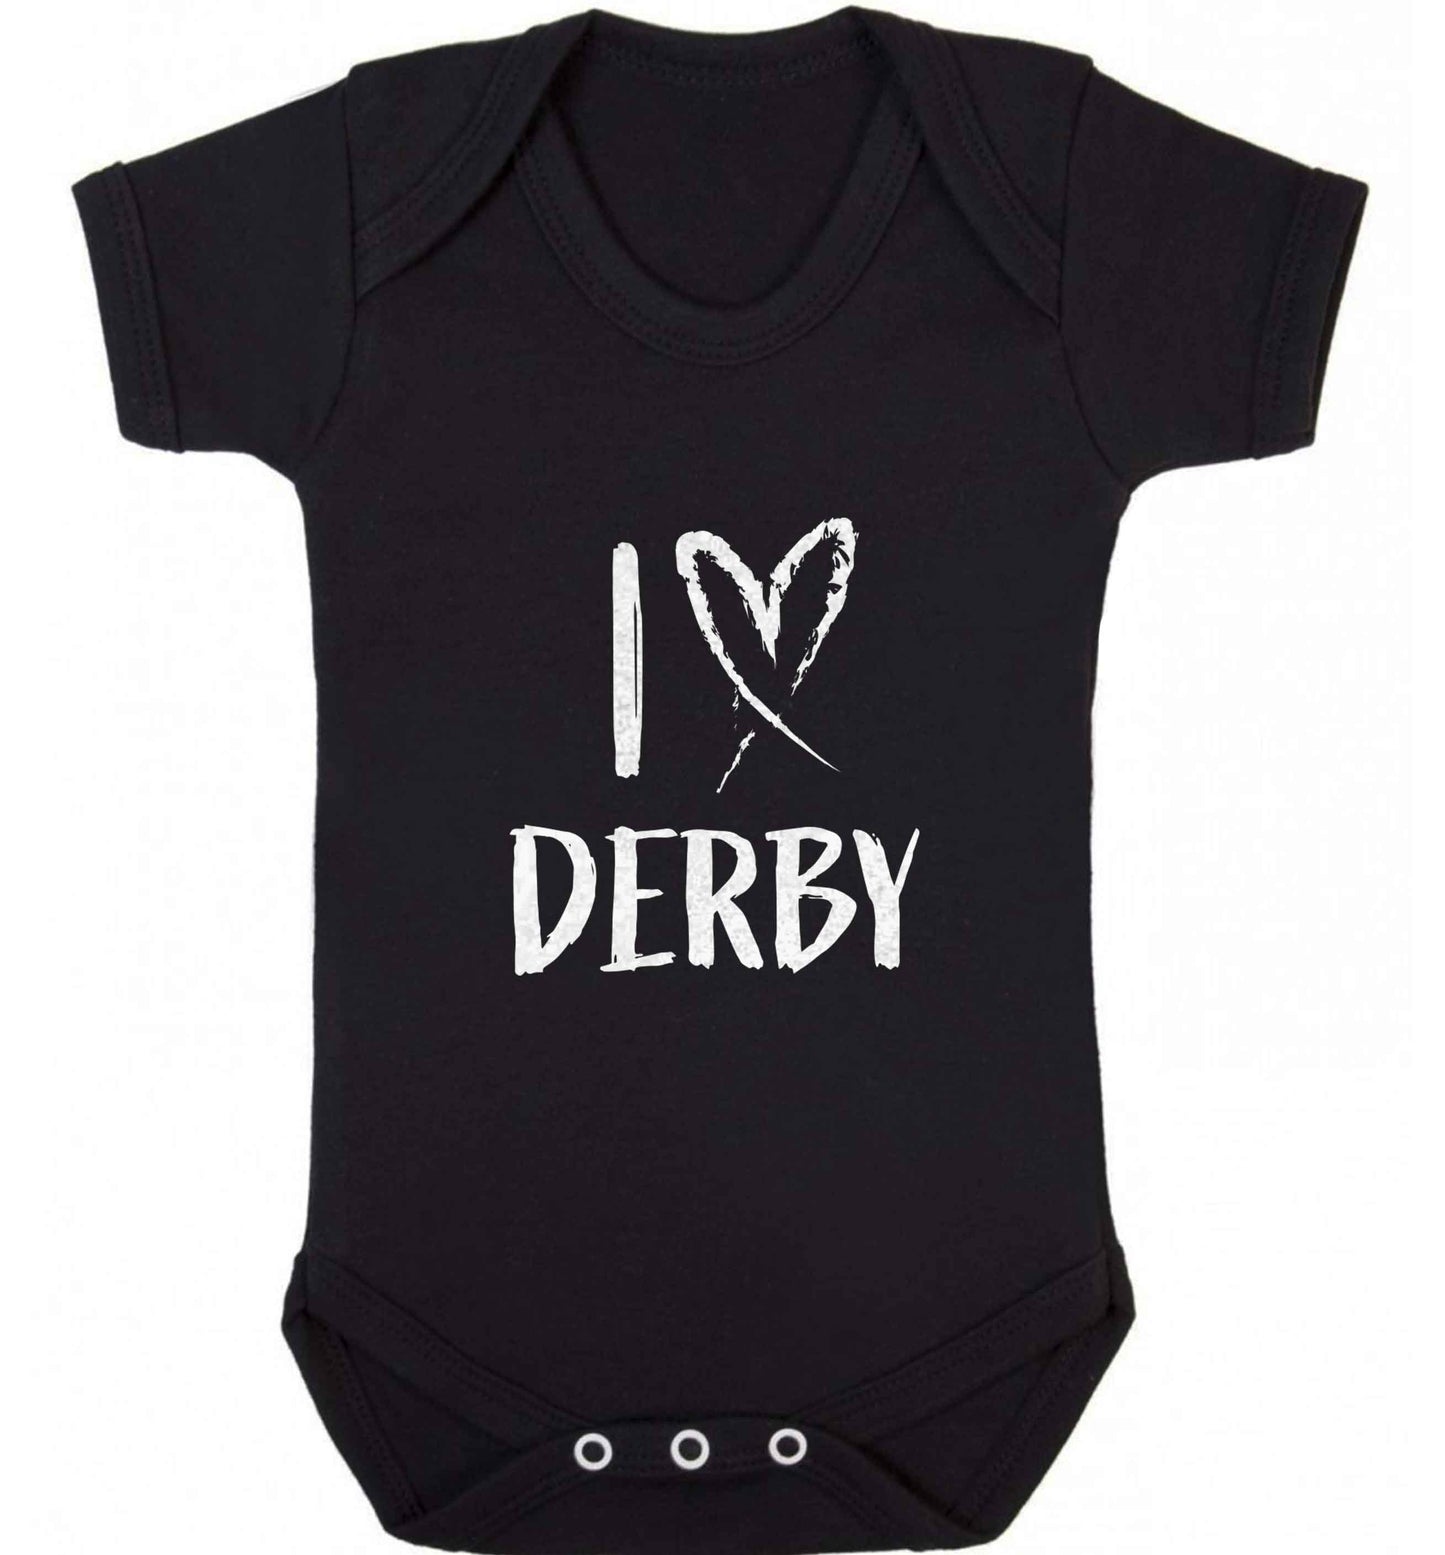 I love Derby baby vest black 18-24 months